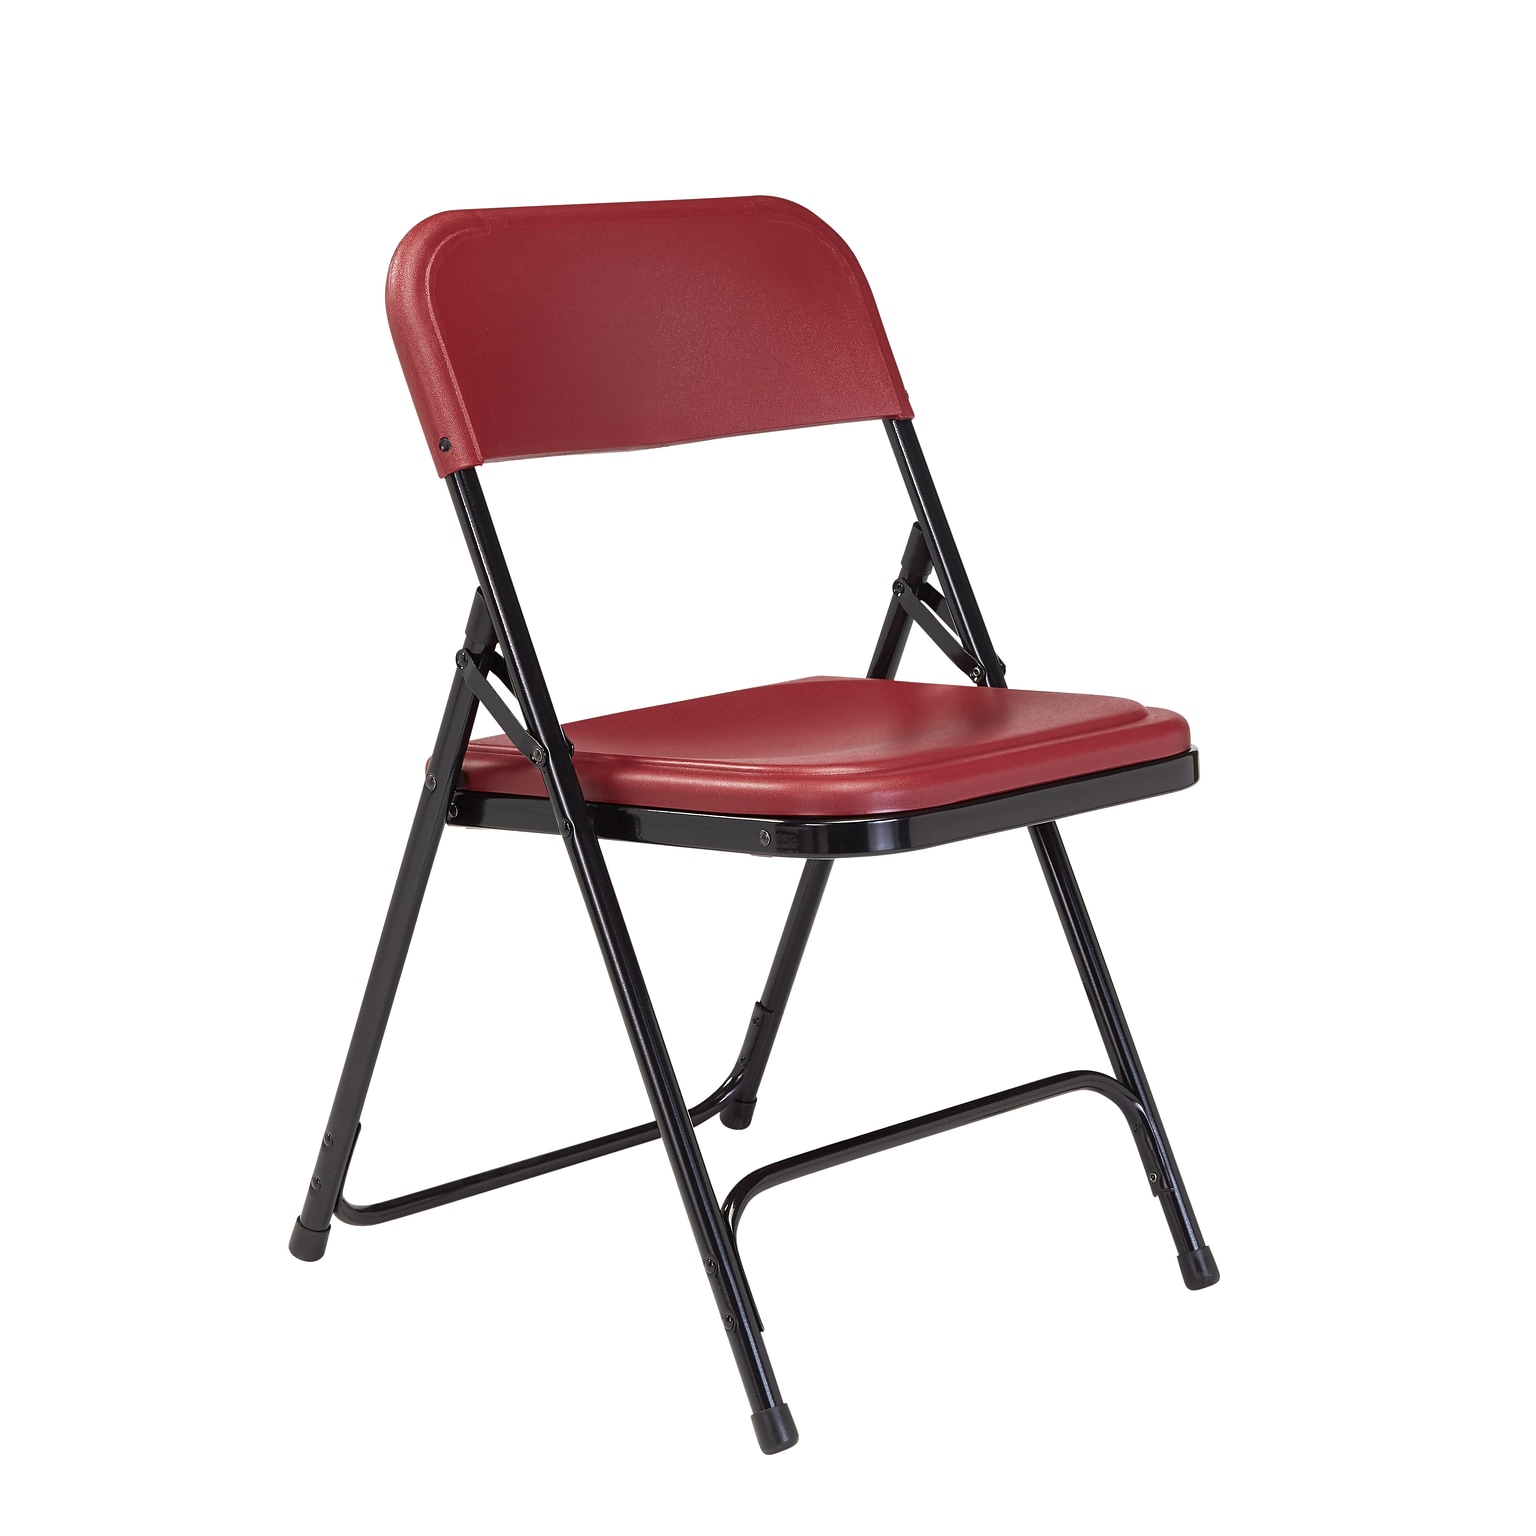 NPS #818 Premium Light-Weight Plastic Folding Chairs, Burgundy/Black - 4 Pack